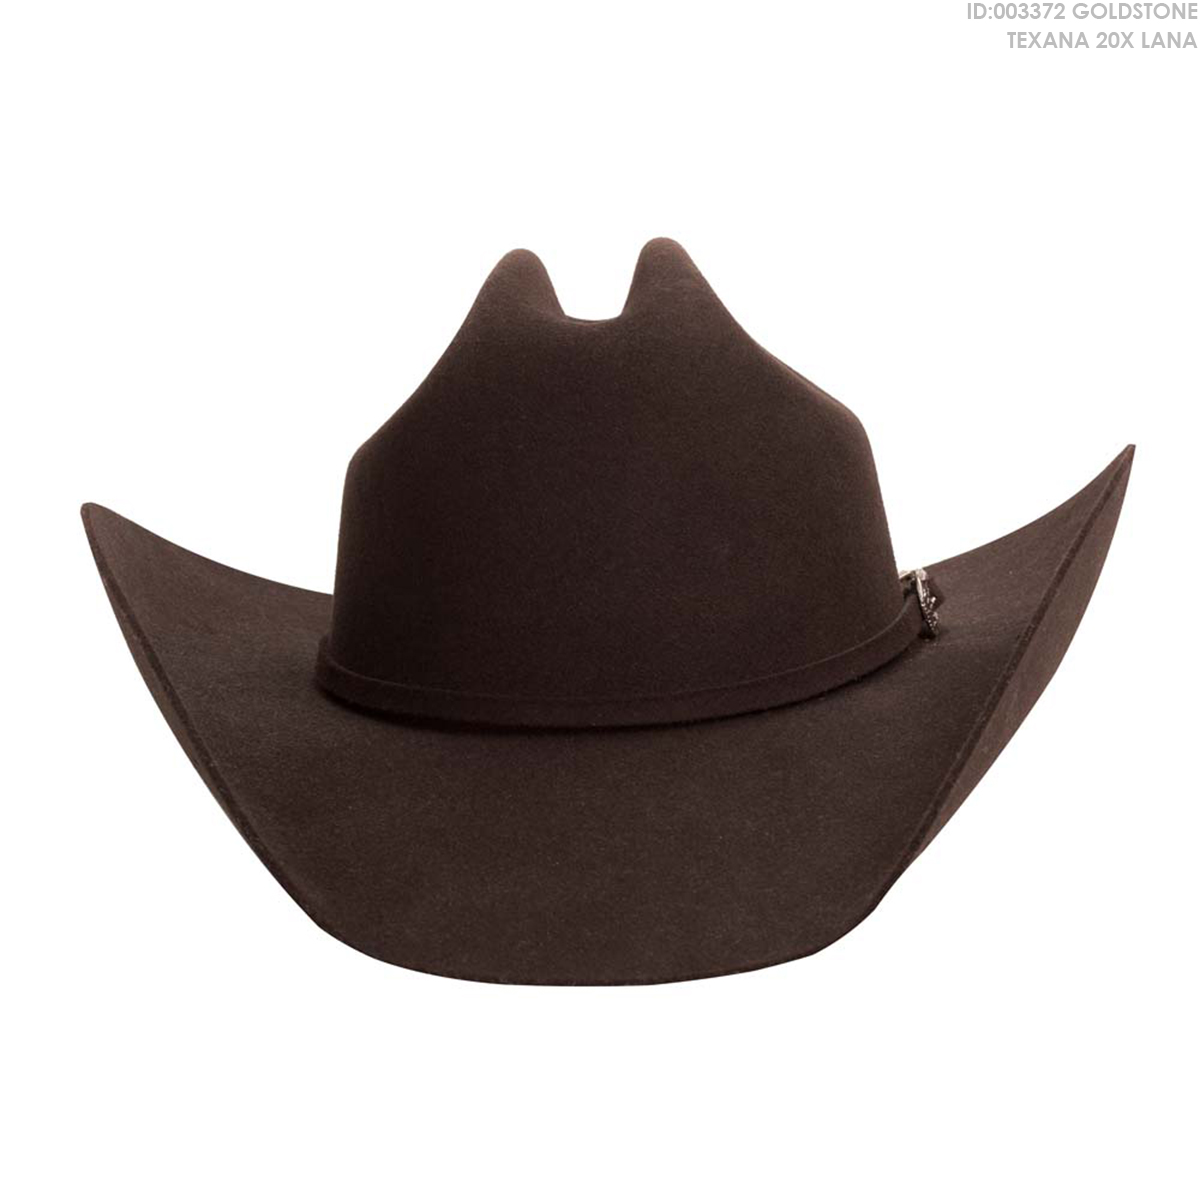 Sombrero Texana Lana - Color: Beige, Cafe, Negro - JR Western